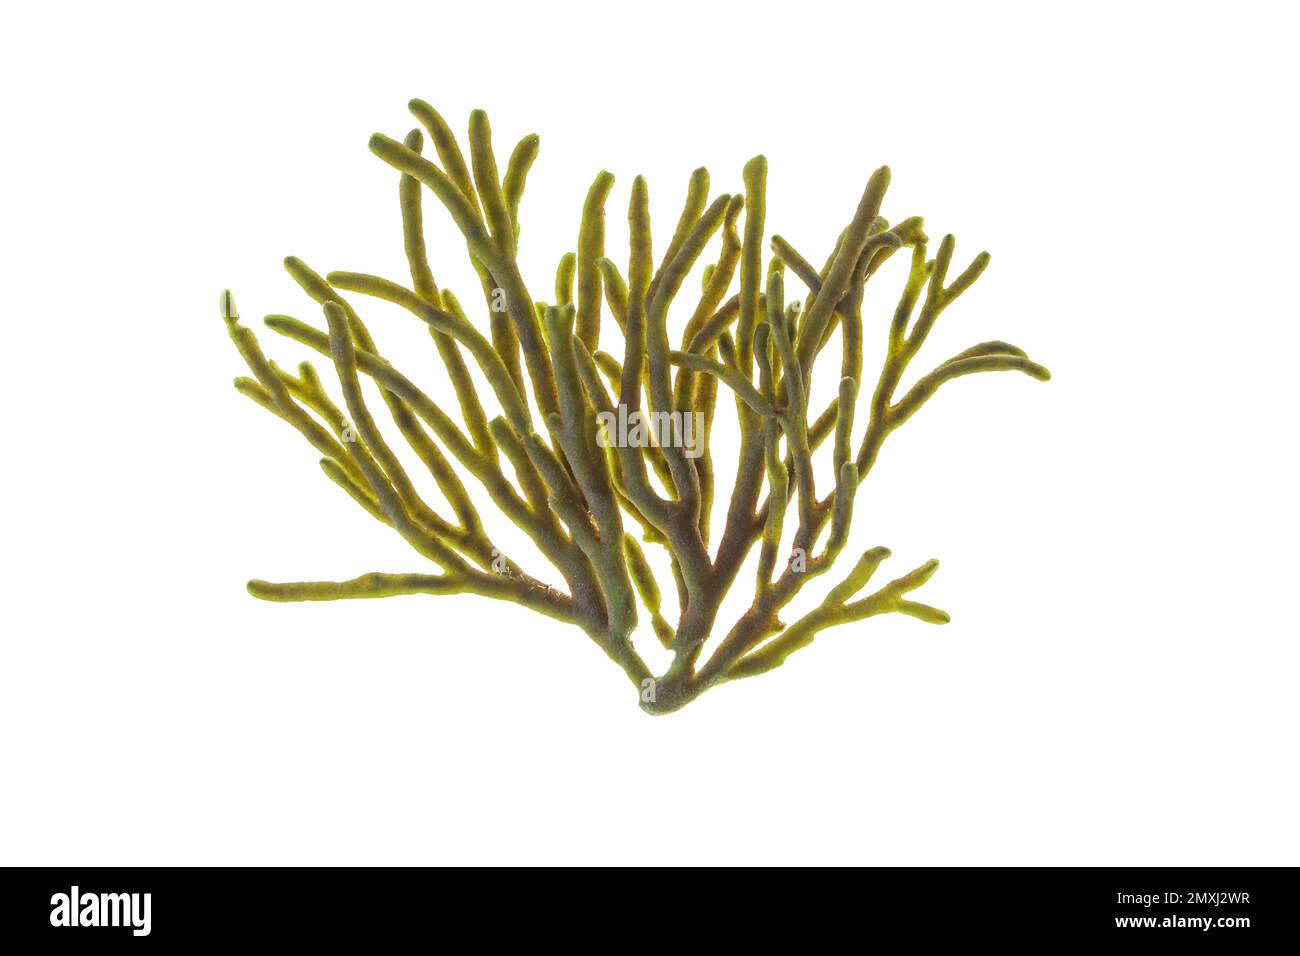 Velvet horn or spongeweed seaweed isolated on white. Codium tomentosum green alga branch Stock Photo